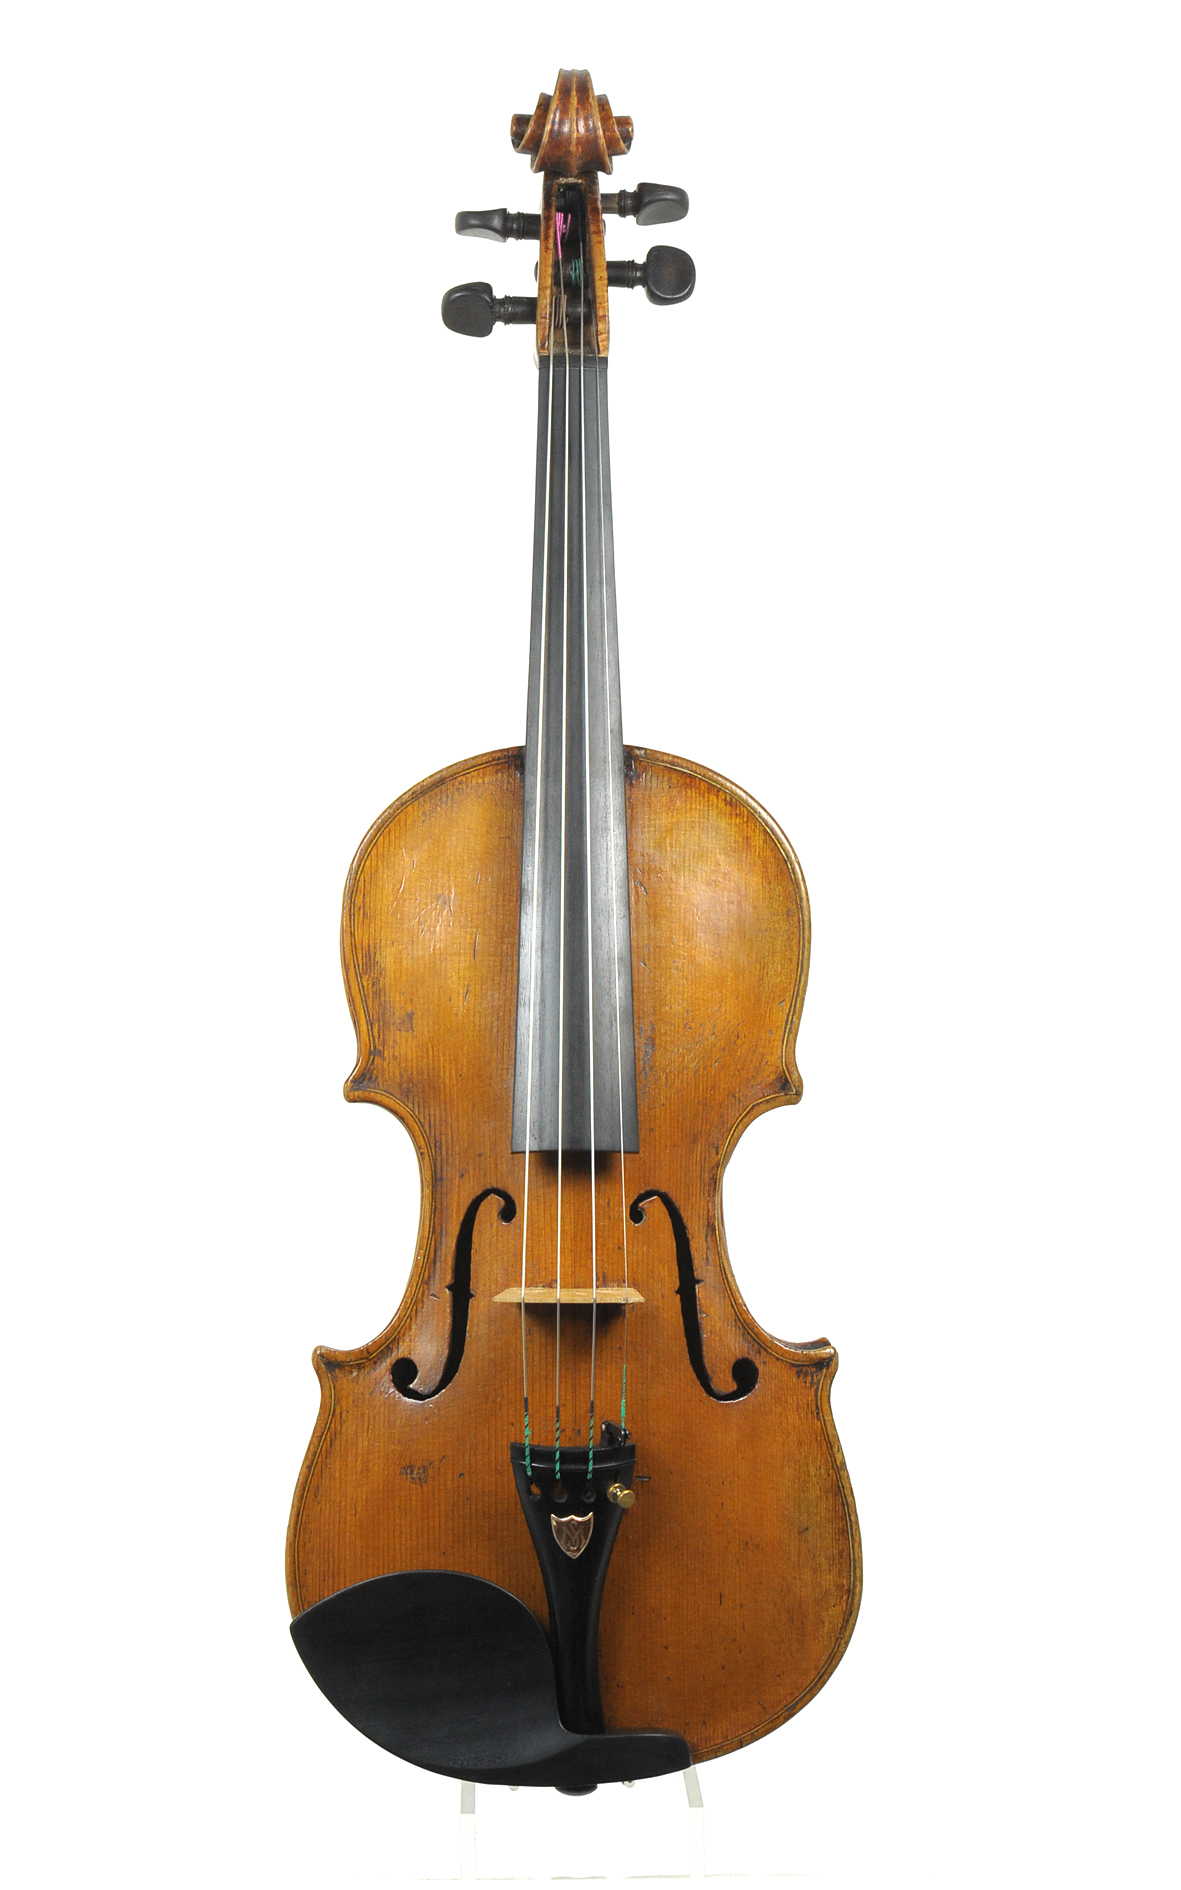 19th century Italian violin by Luigi Cardi, Verona (certificate by